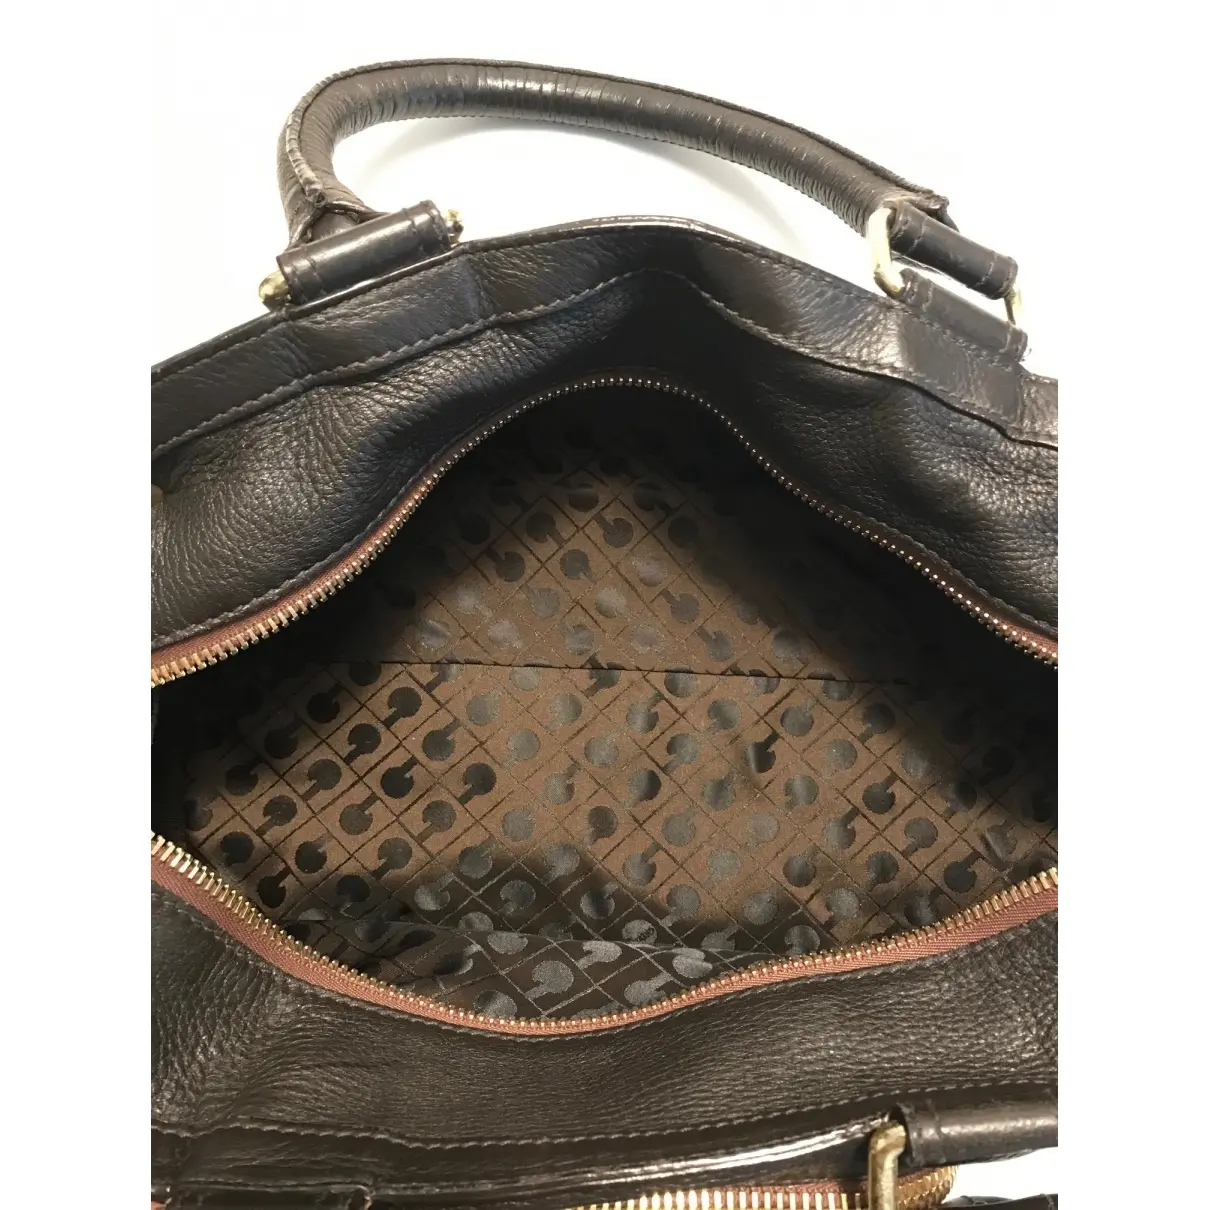 Leather handbag Gherardini